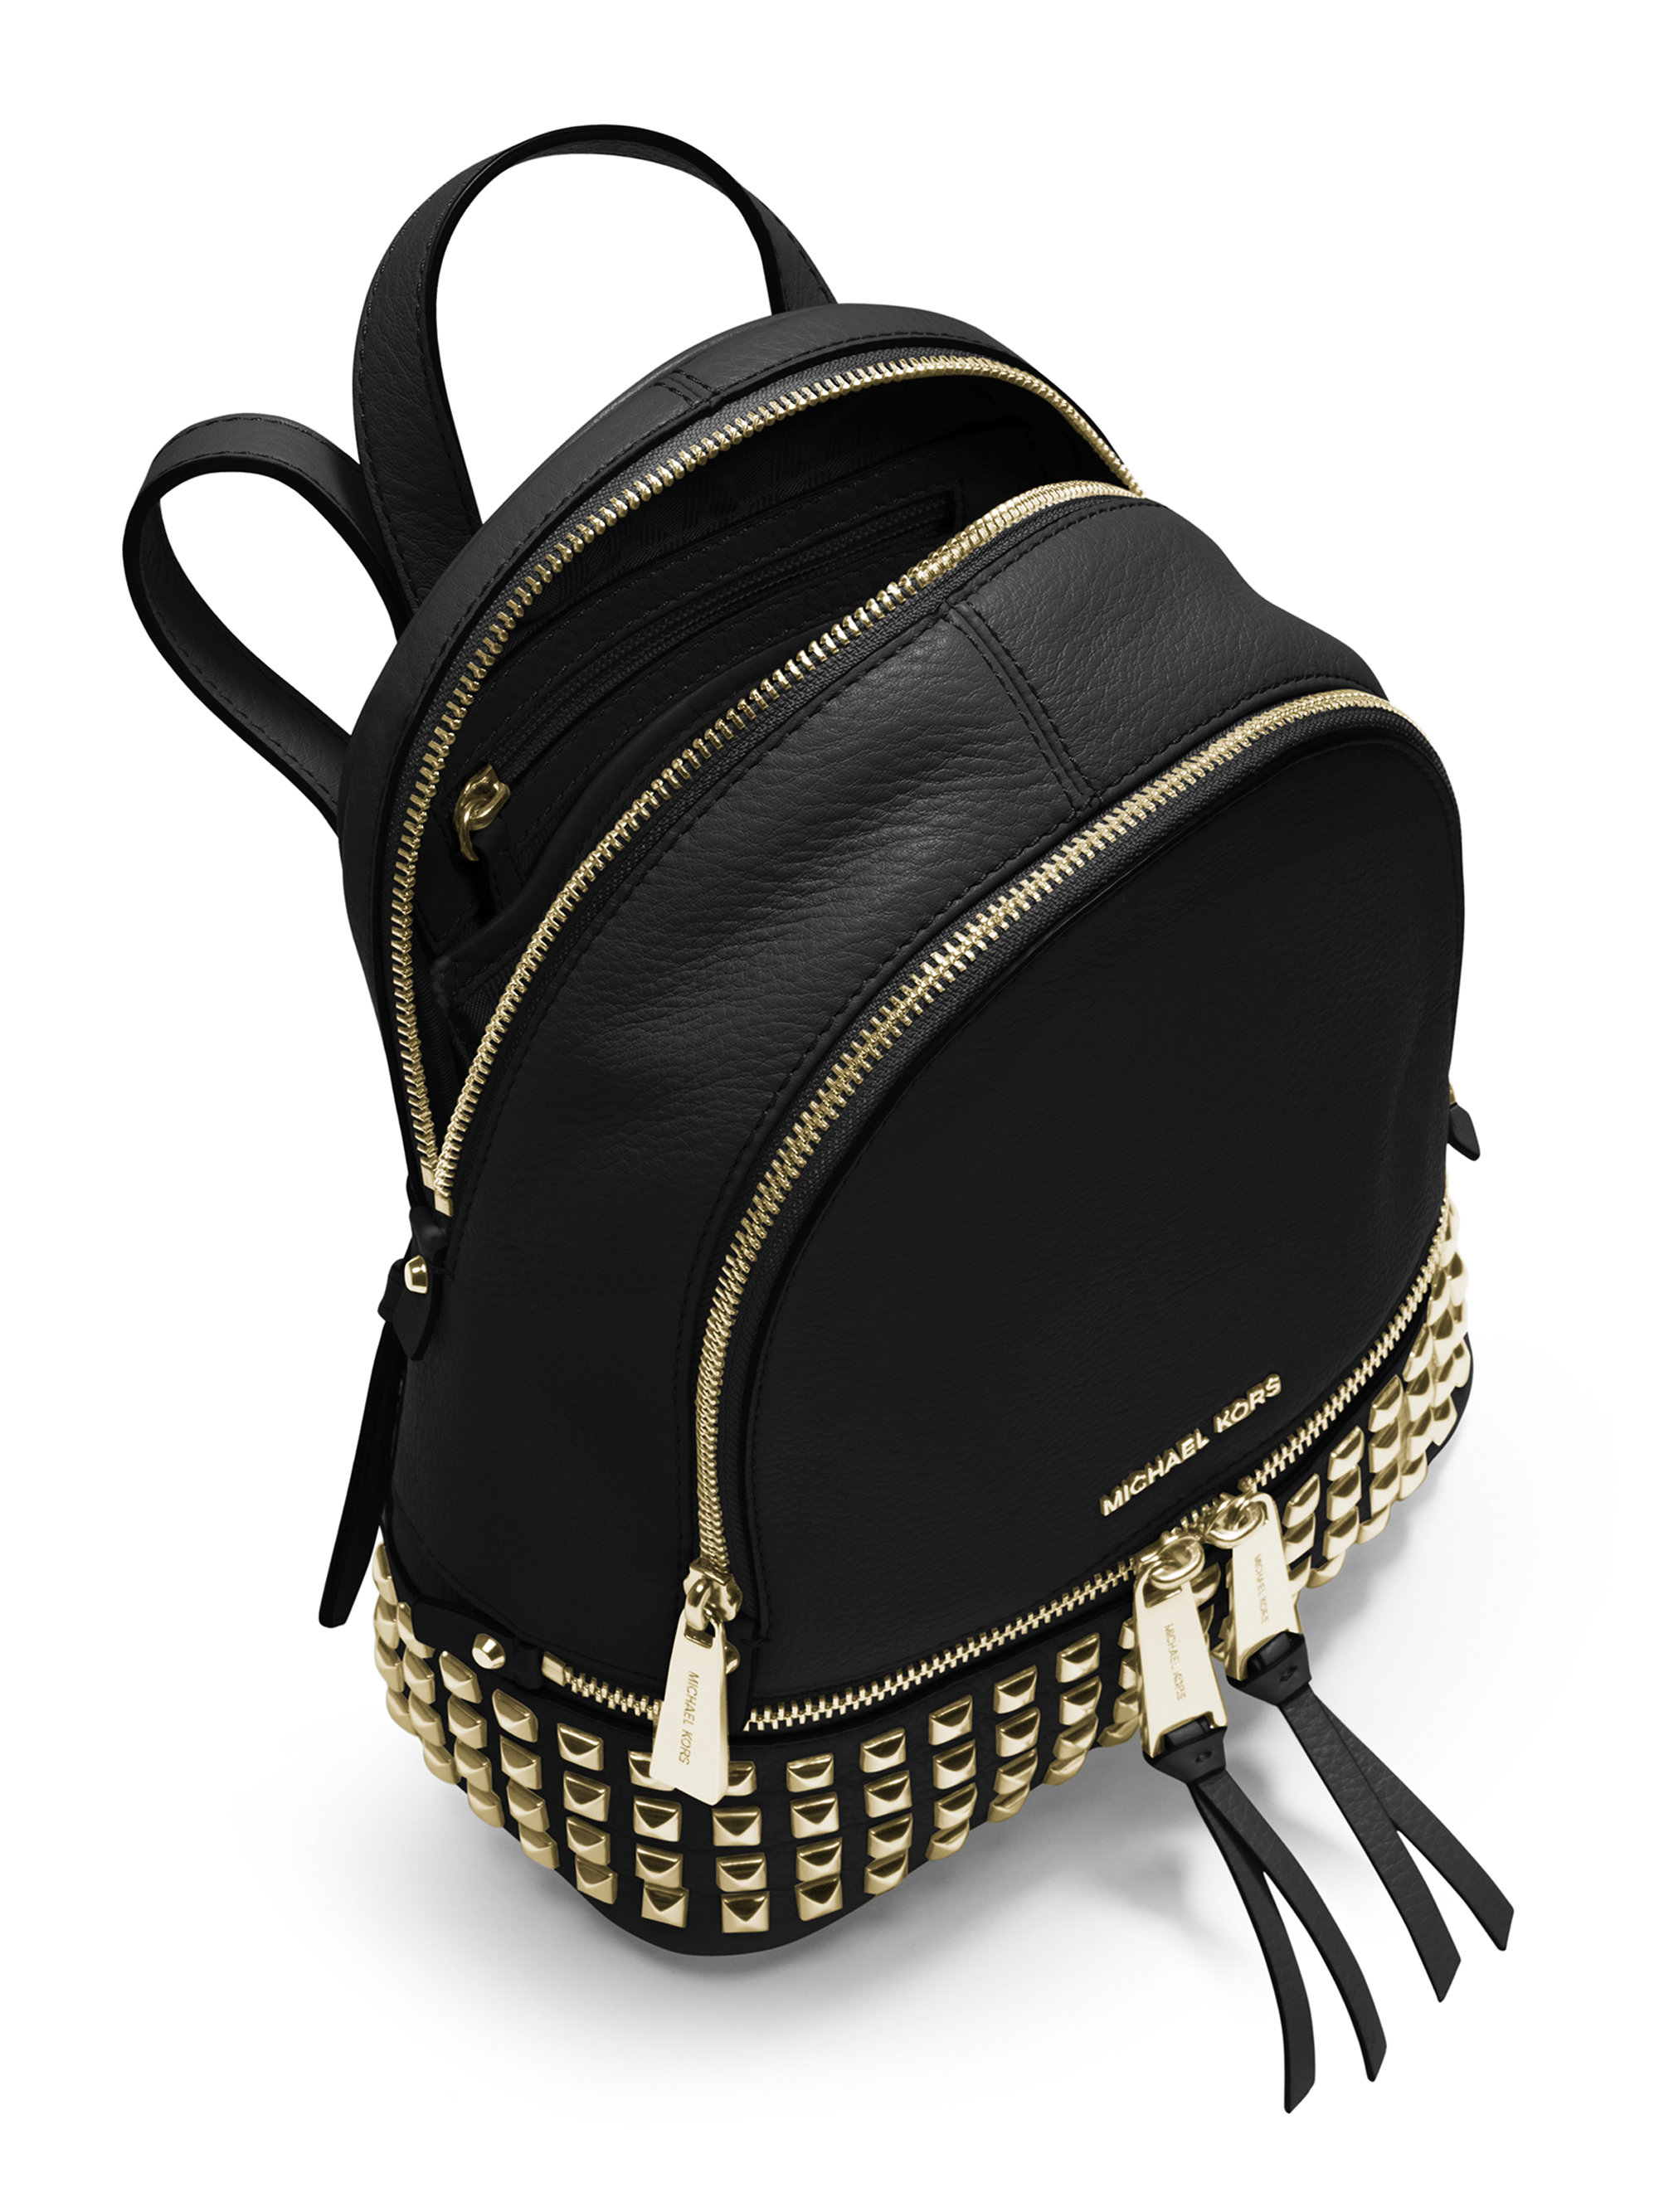 Lyst - Michael Michael Kors Rhea Mini Studded Leather Backpack in Black